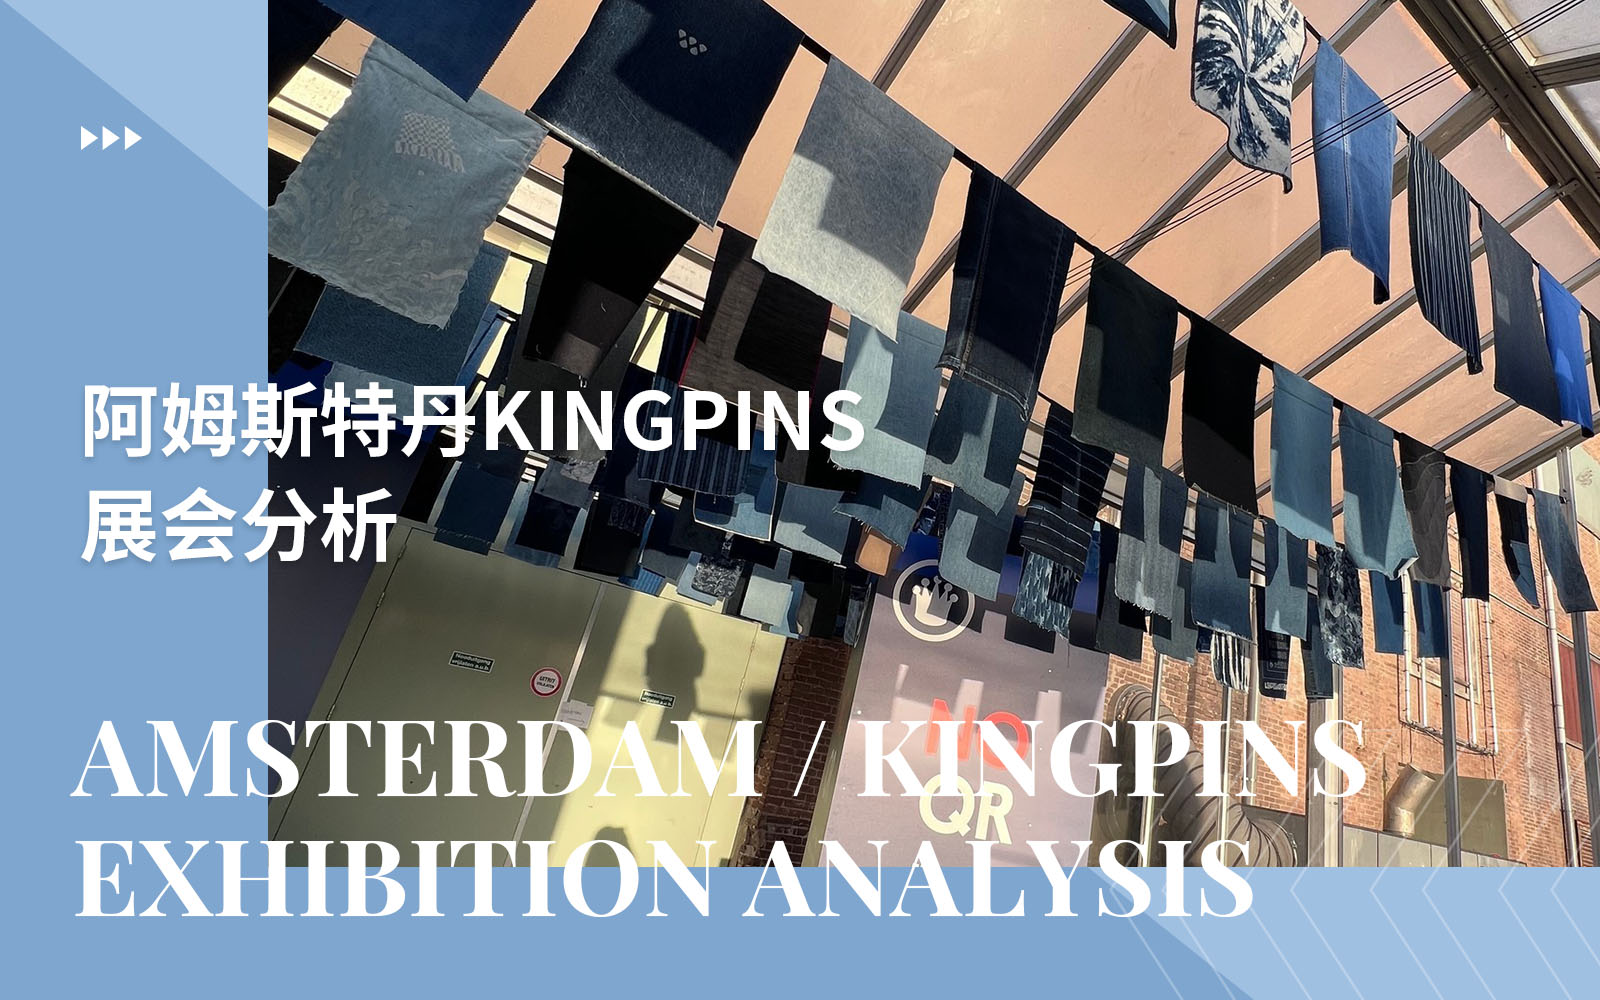 The Analysis of Kingpins Show 2024 The Amsterdam Denim Fair